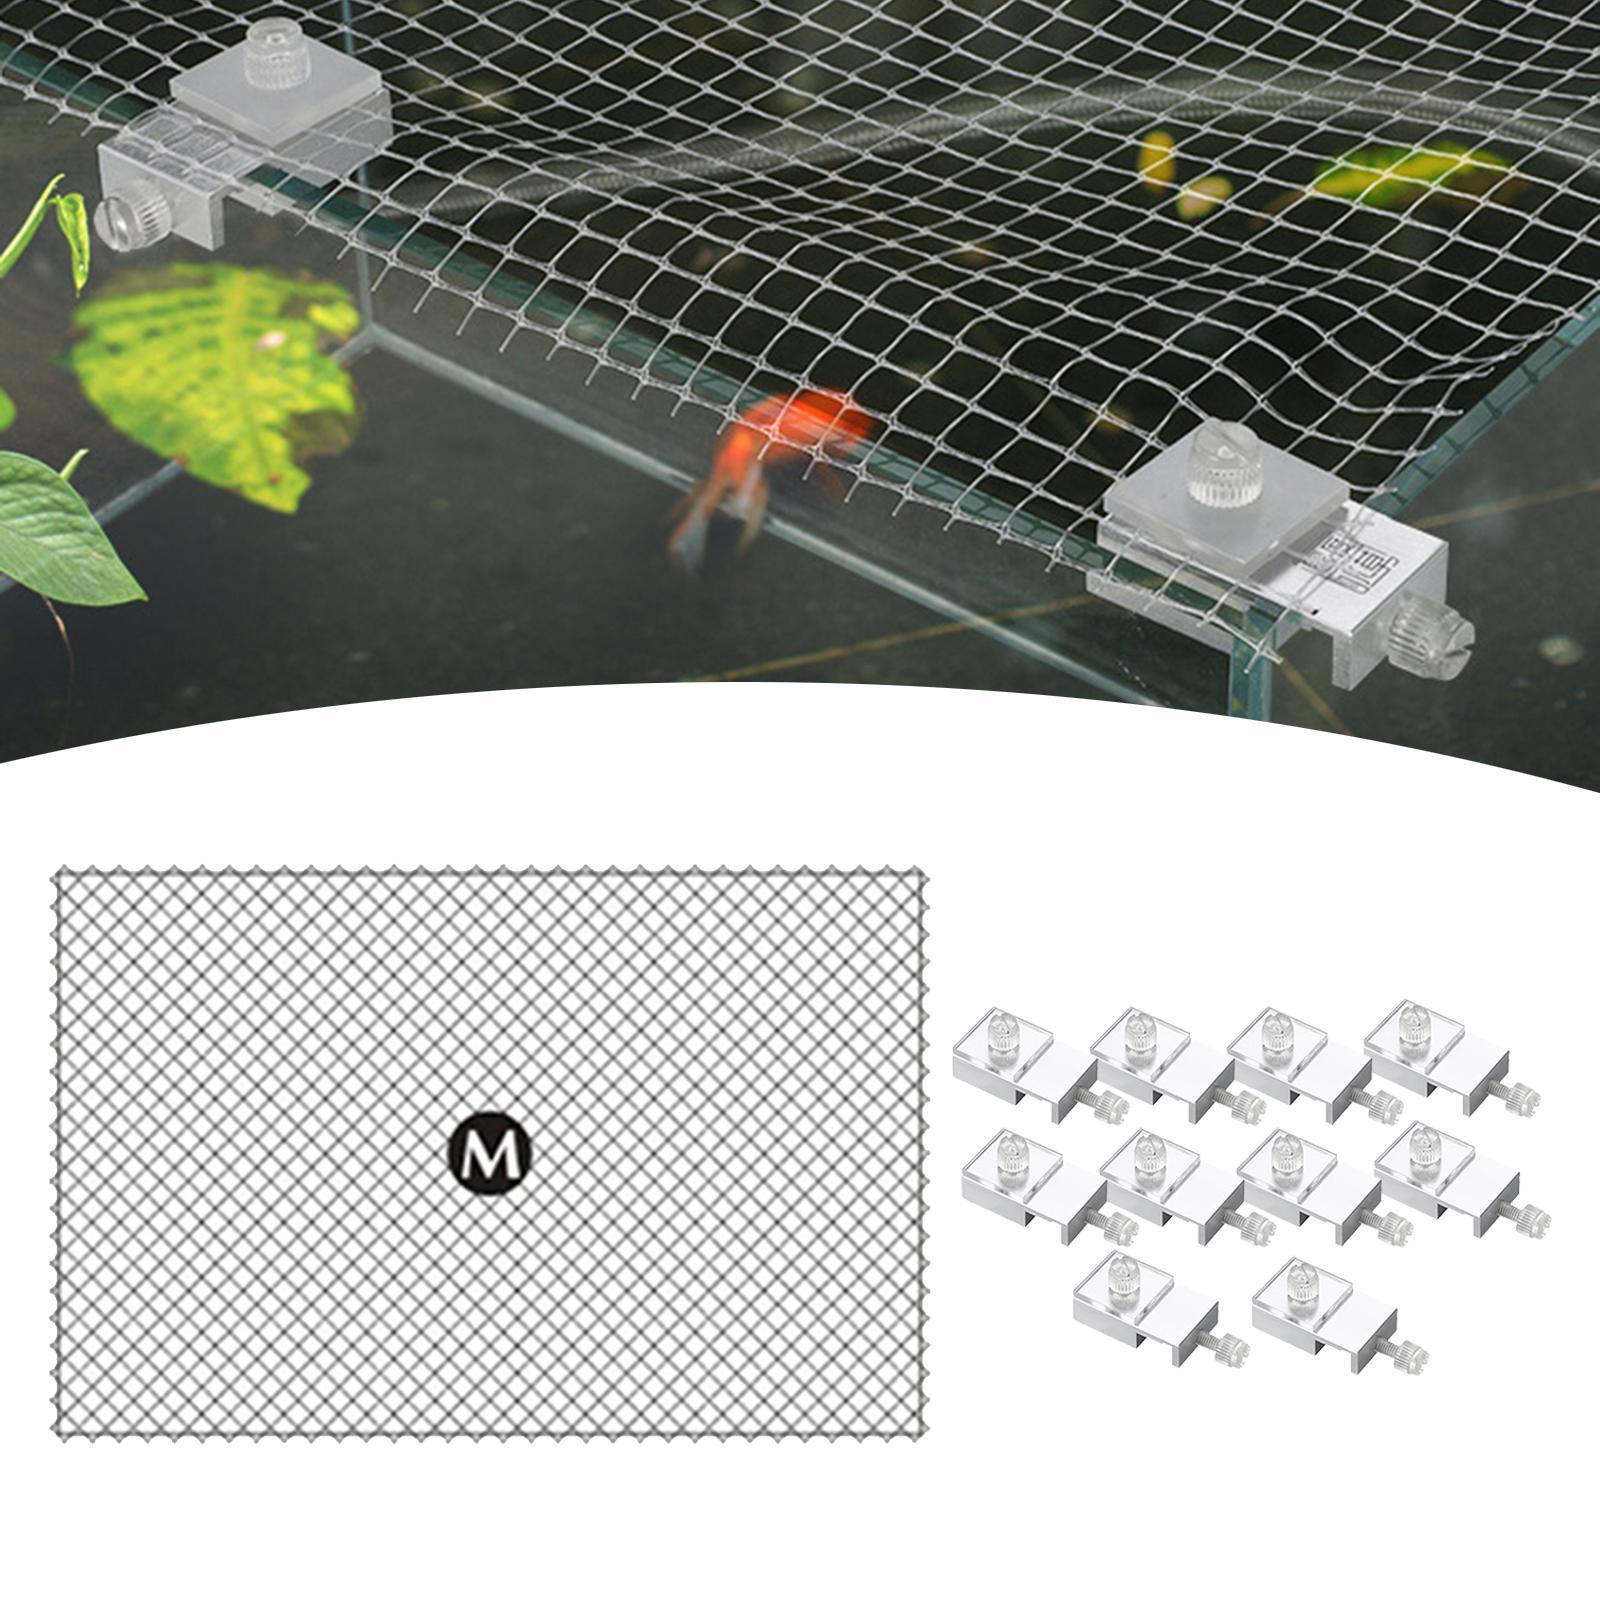 Mesh Netting Fish Tank Cover Pet Supplies Home Aquarium Screen Net